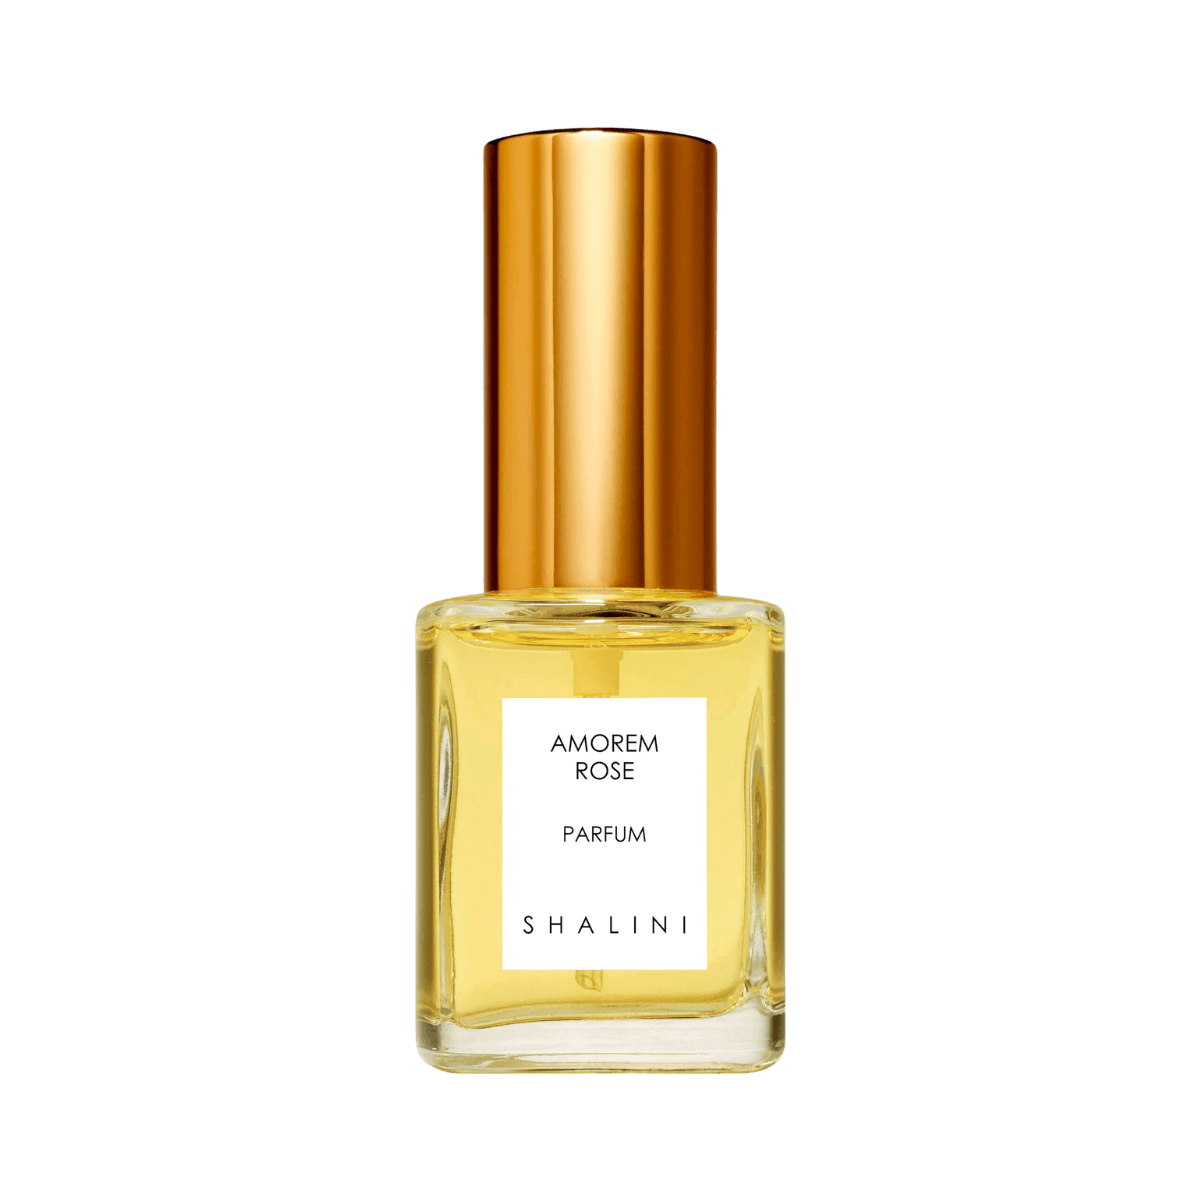 Image of Amorem Rose extrait de parfum by the perfume brand Shalini